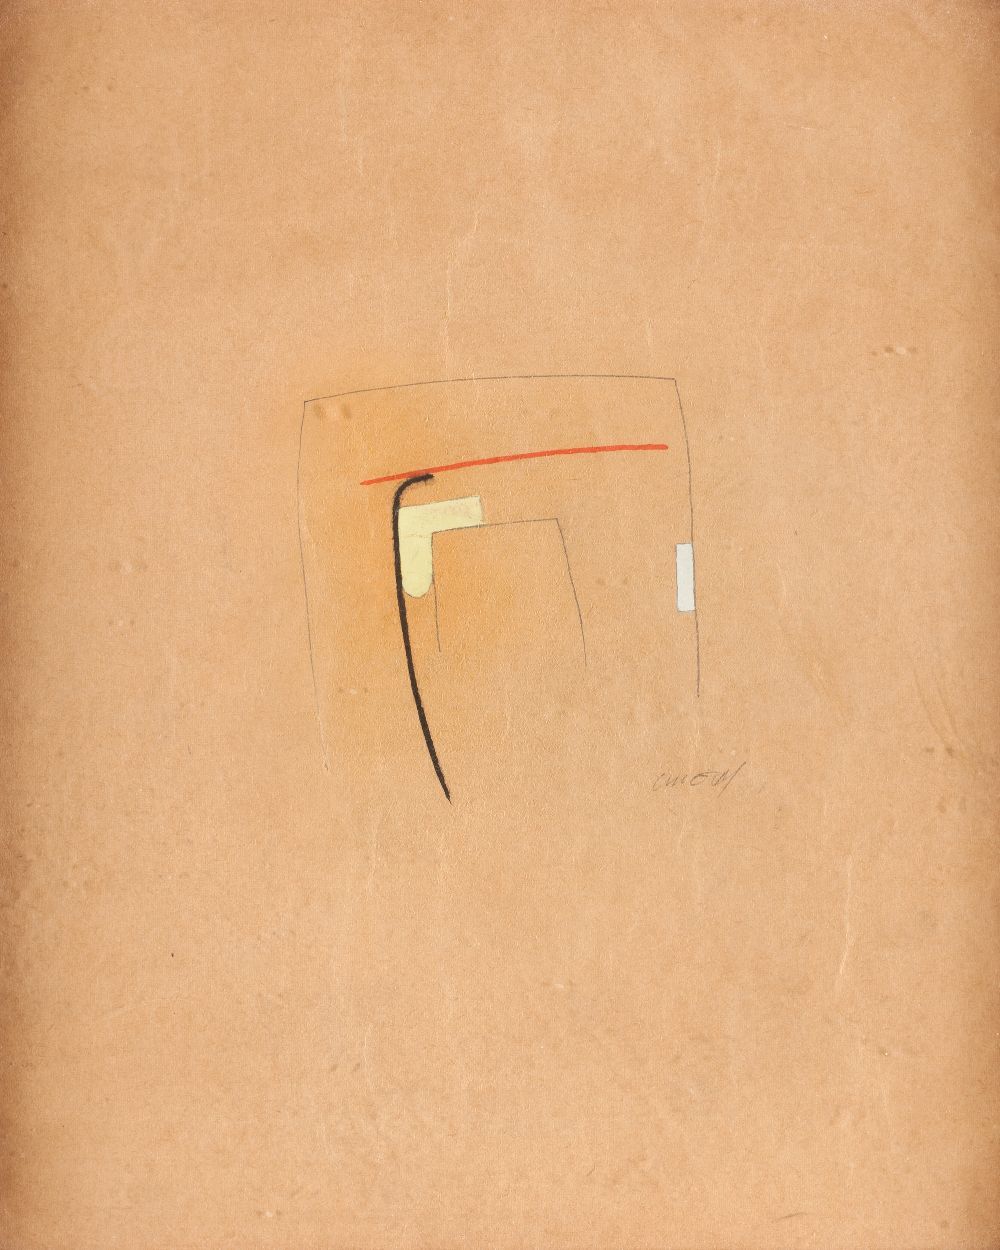 ANONYMOUS (C.20th / .) "Untitled" 右下角有难以辨认的签名 纸上混合媒体。25 x 23 cm